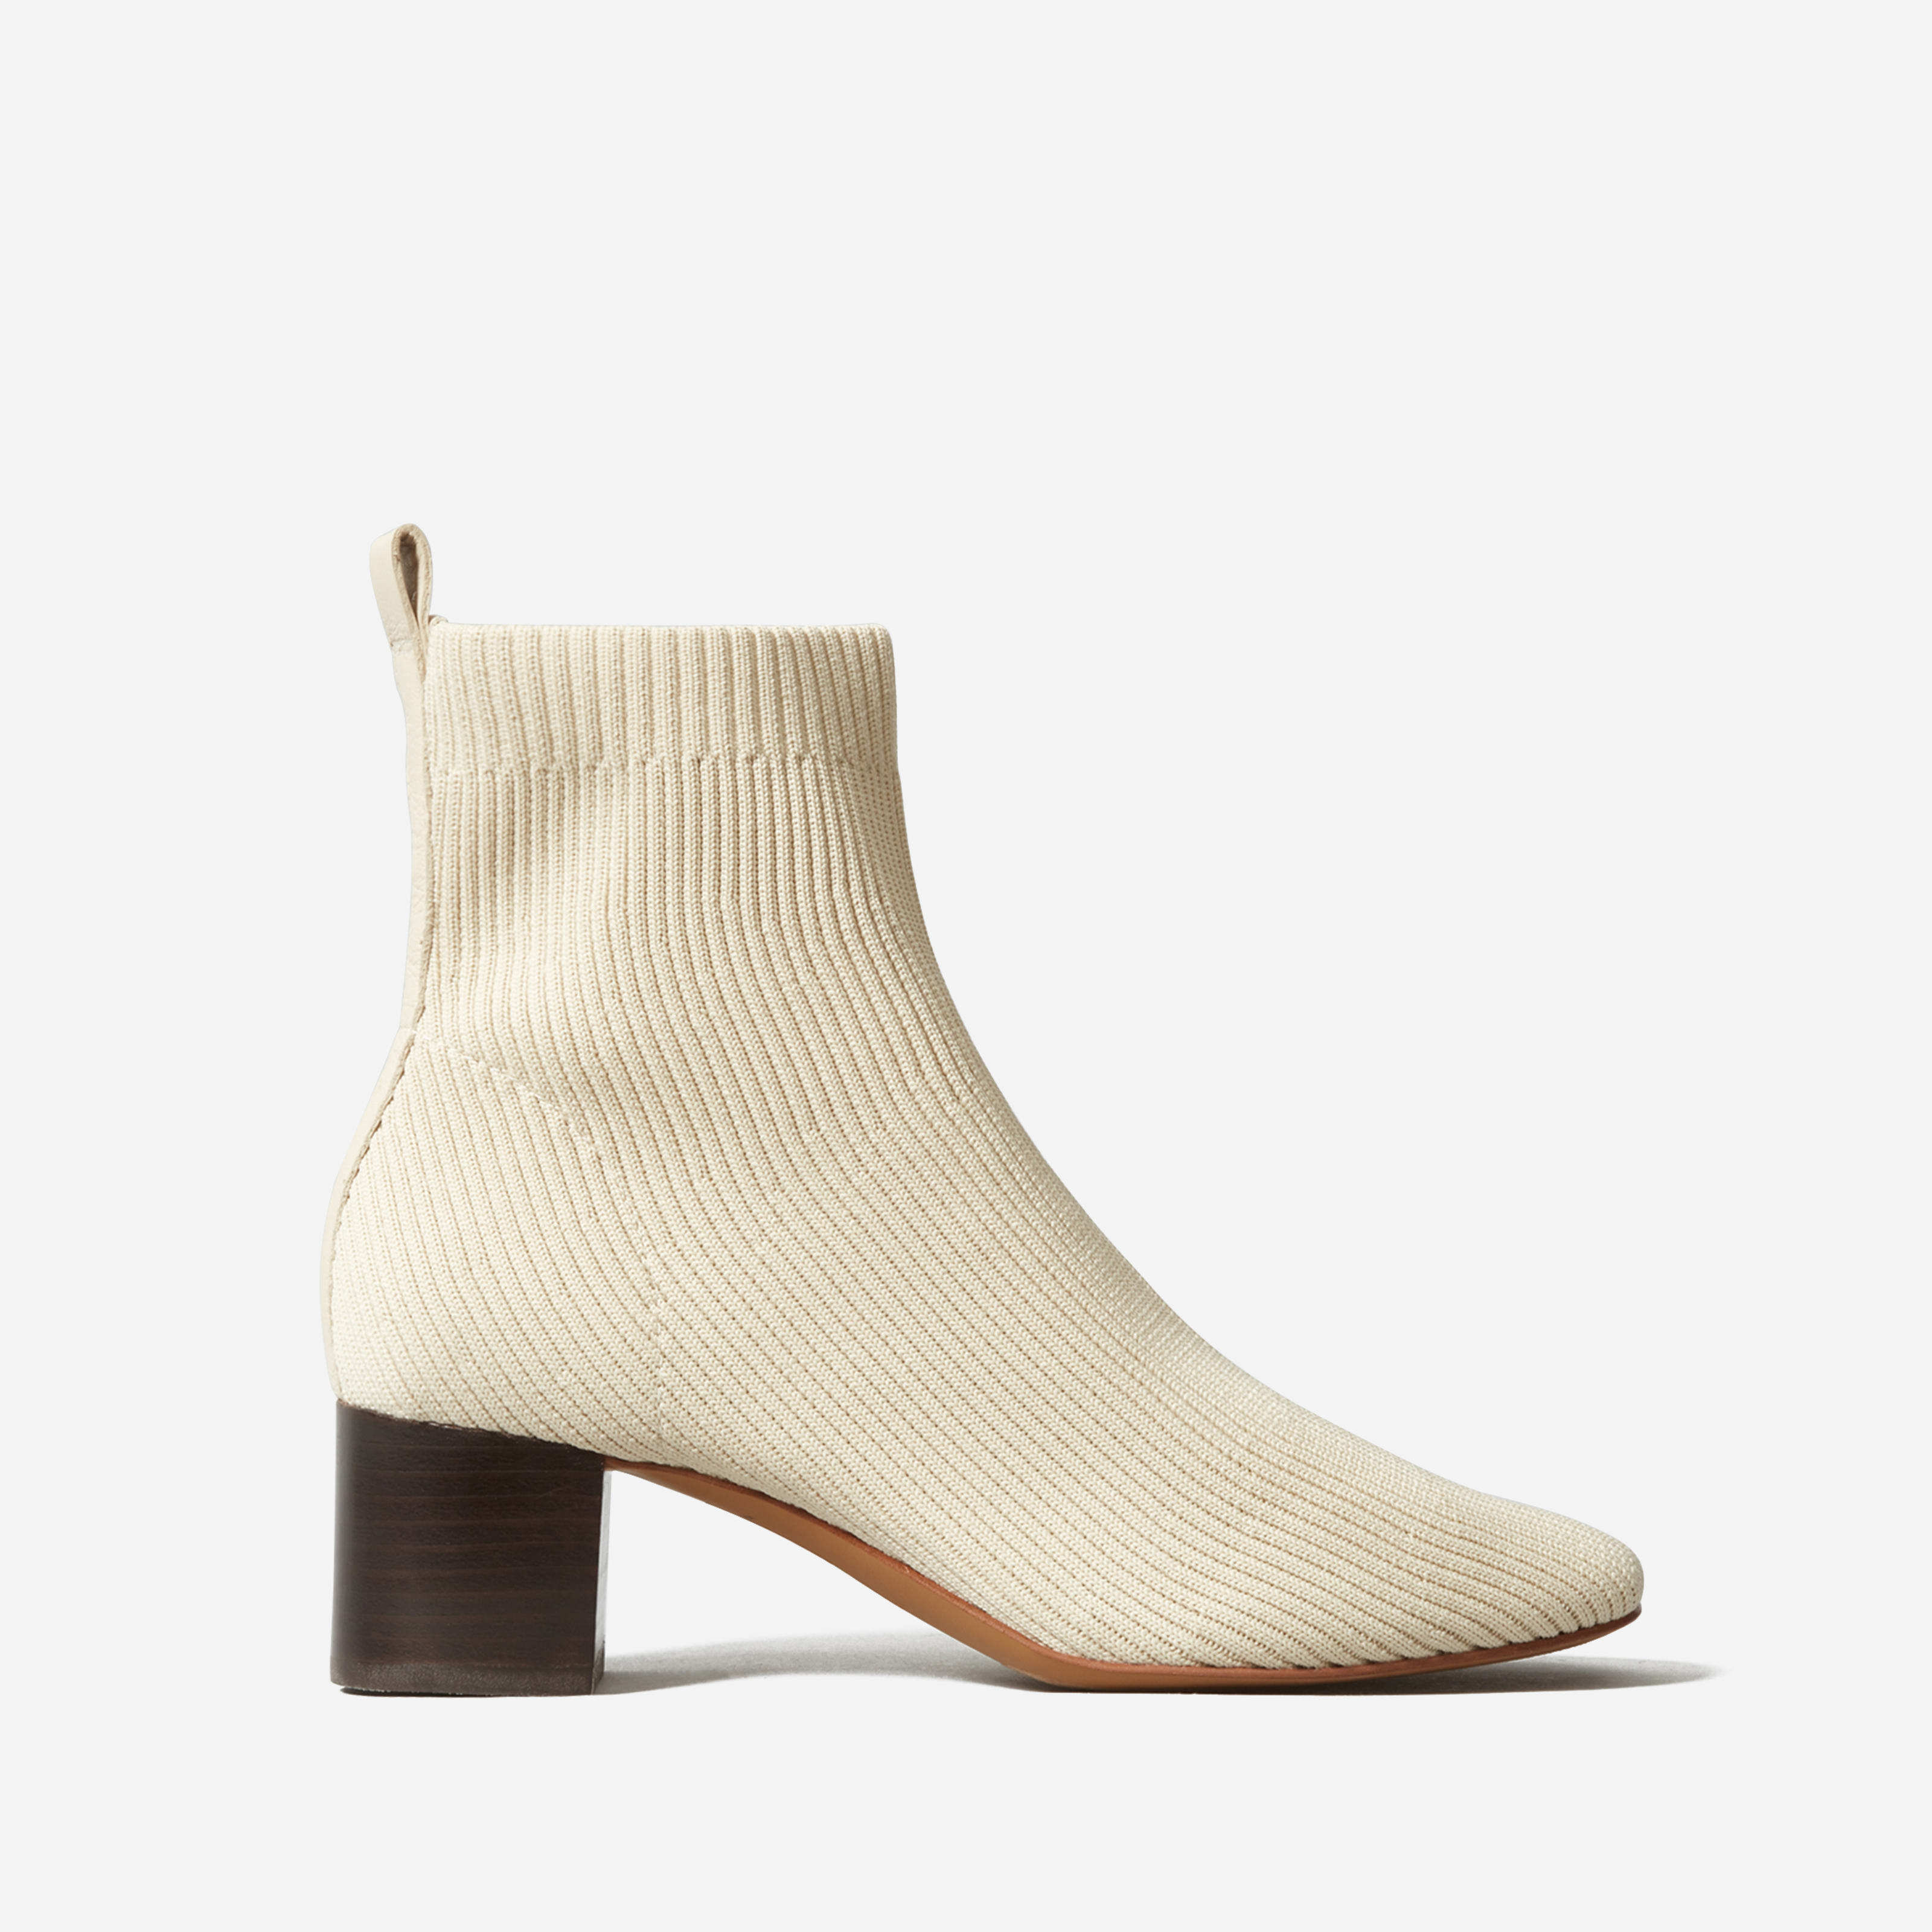 women's glove boot by everlane in bone white, size 5